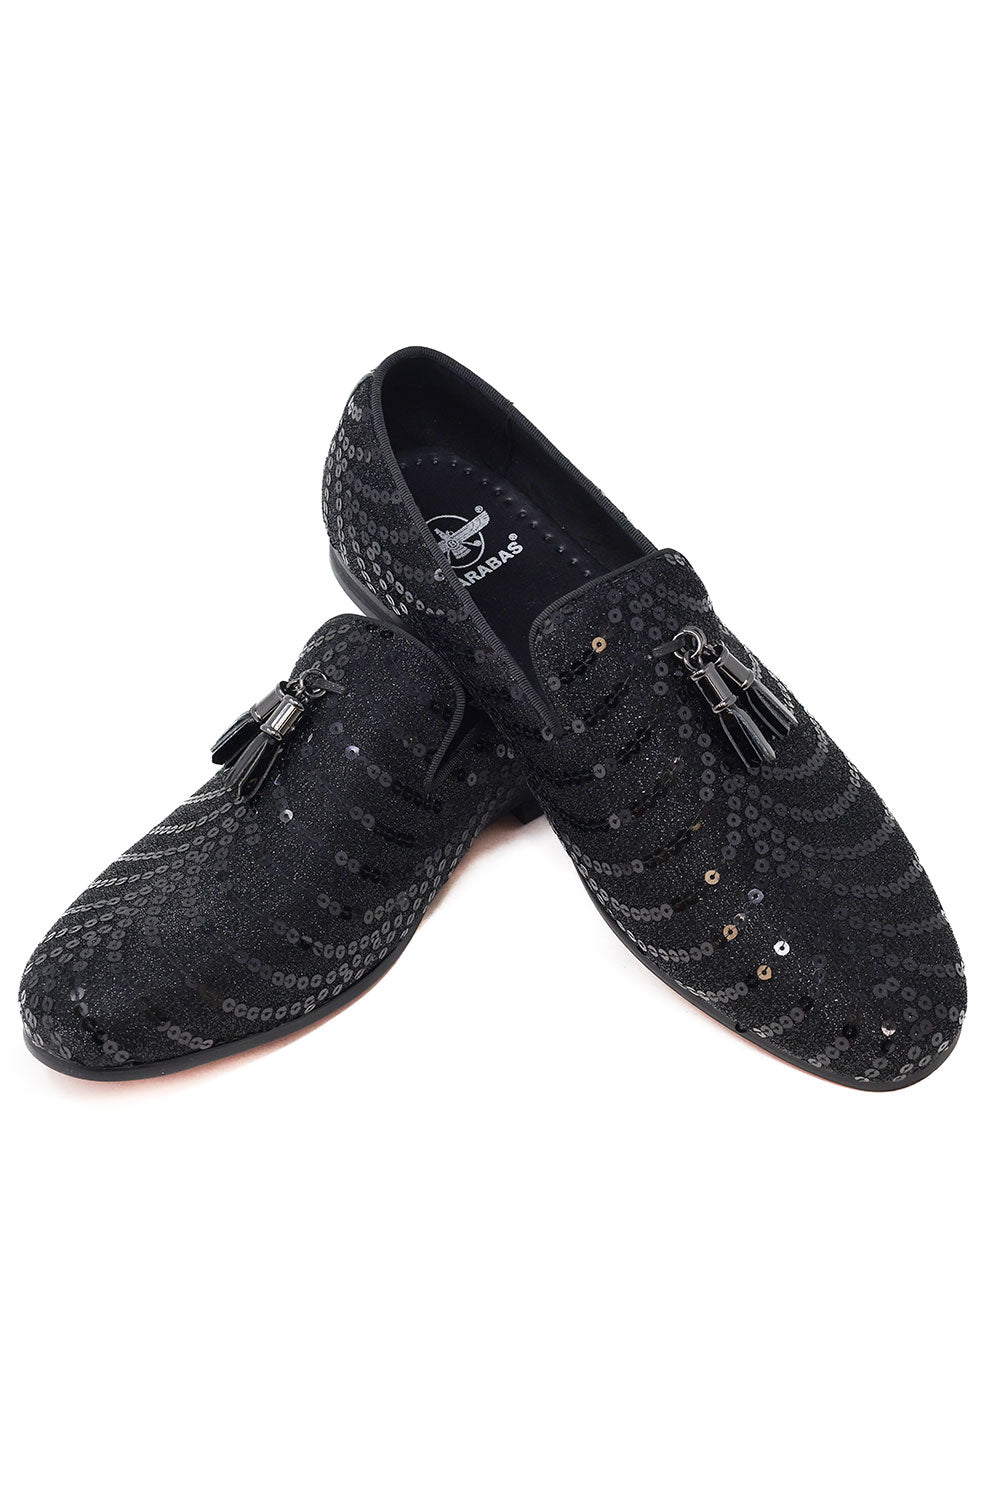 Barabas Men's Sequin Design Tassel Slip On Loafer Shoes 2SHR8 Black Black